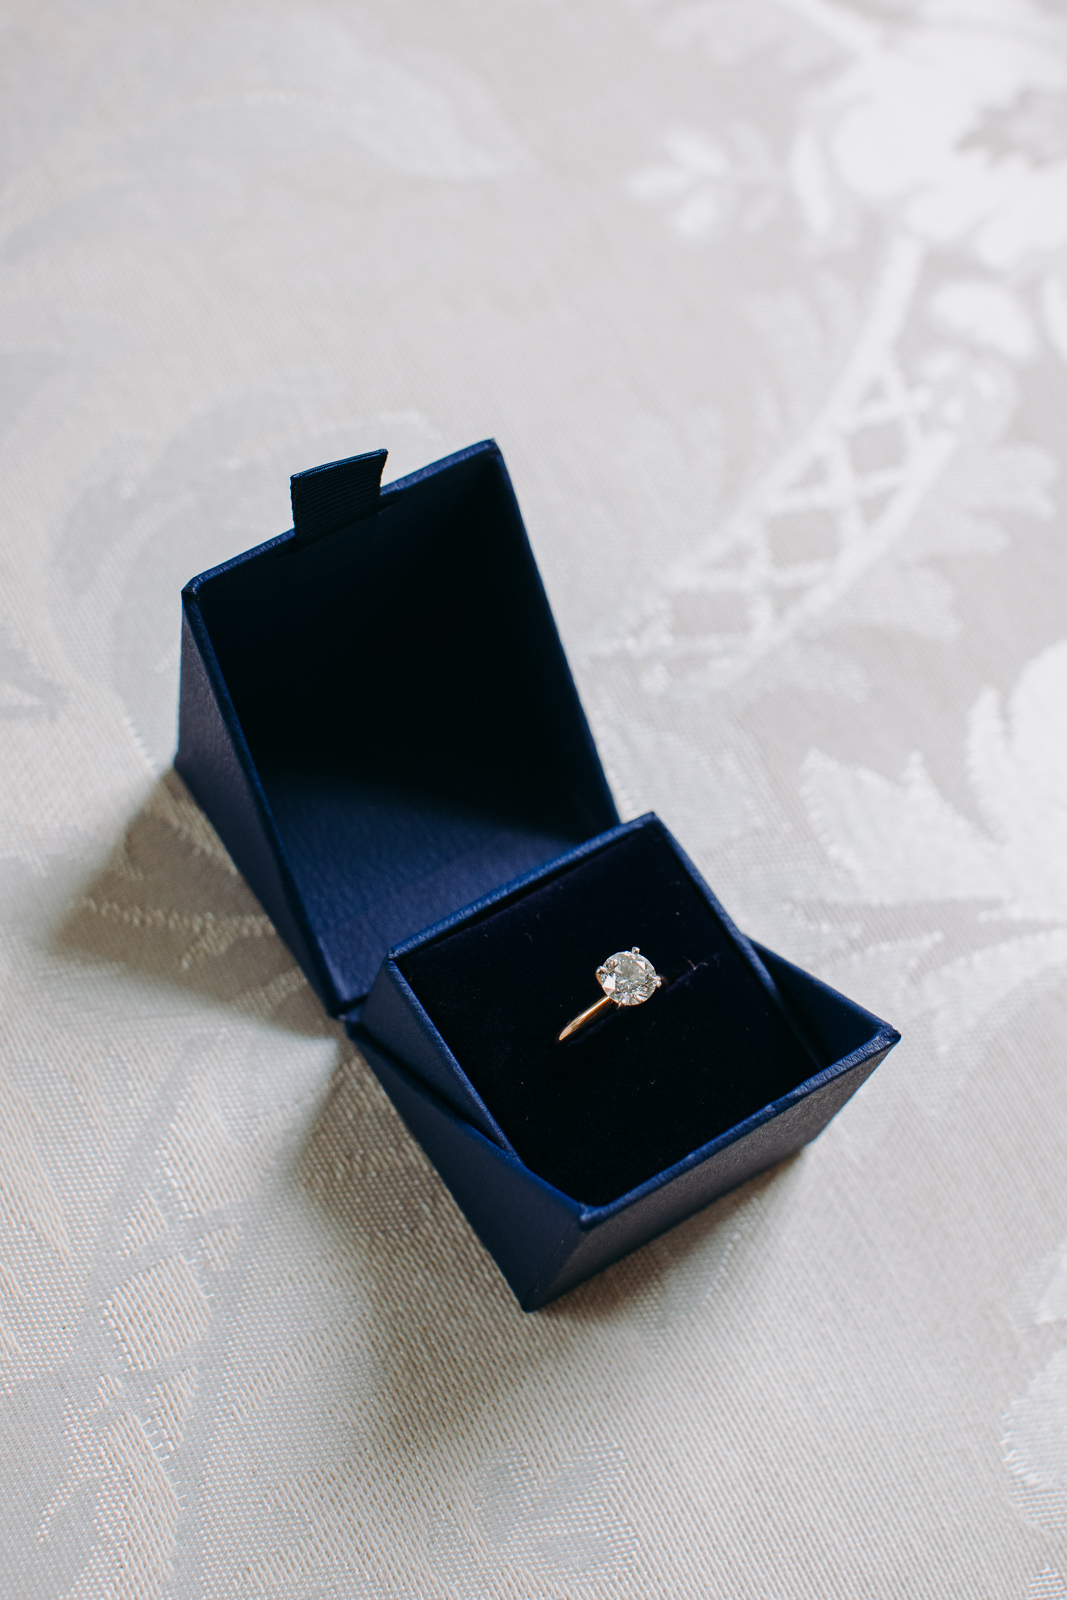 Brittland Manor Wedding ring